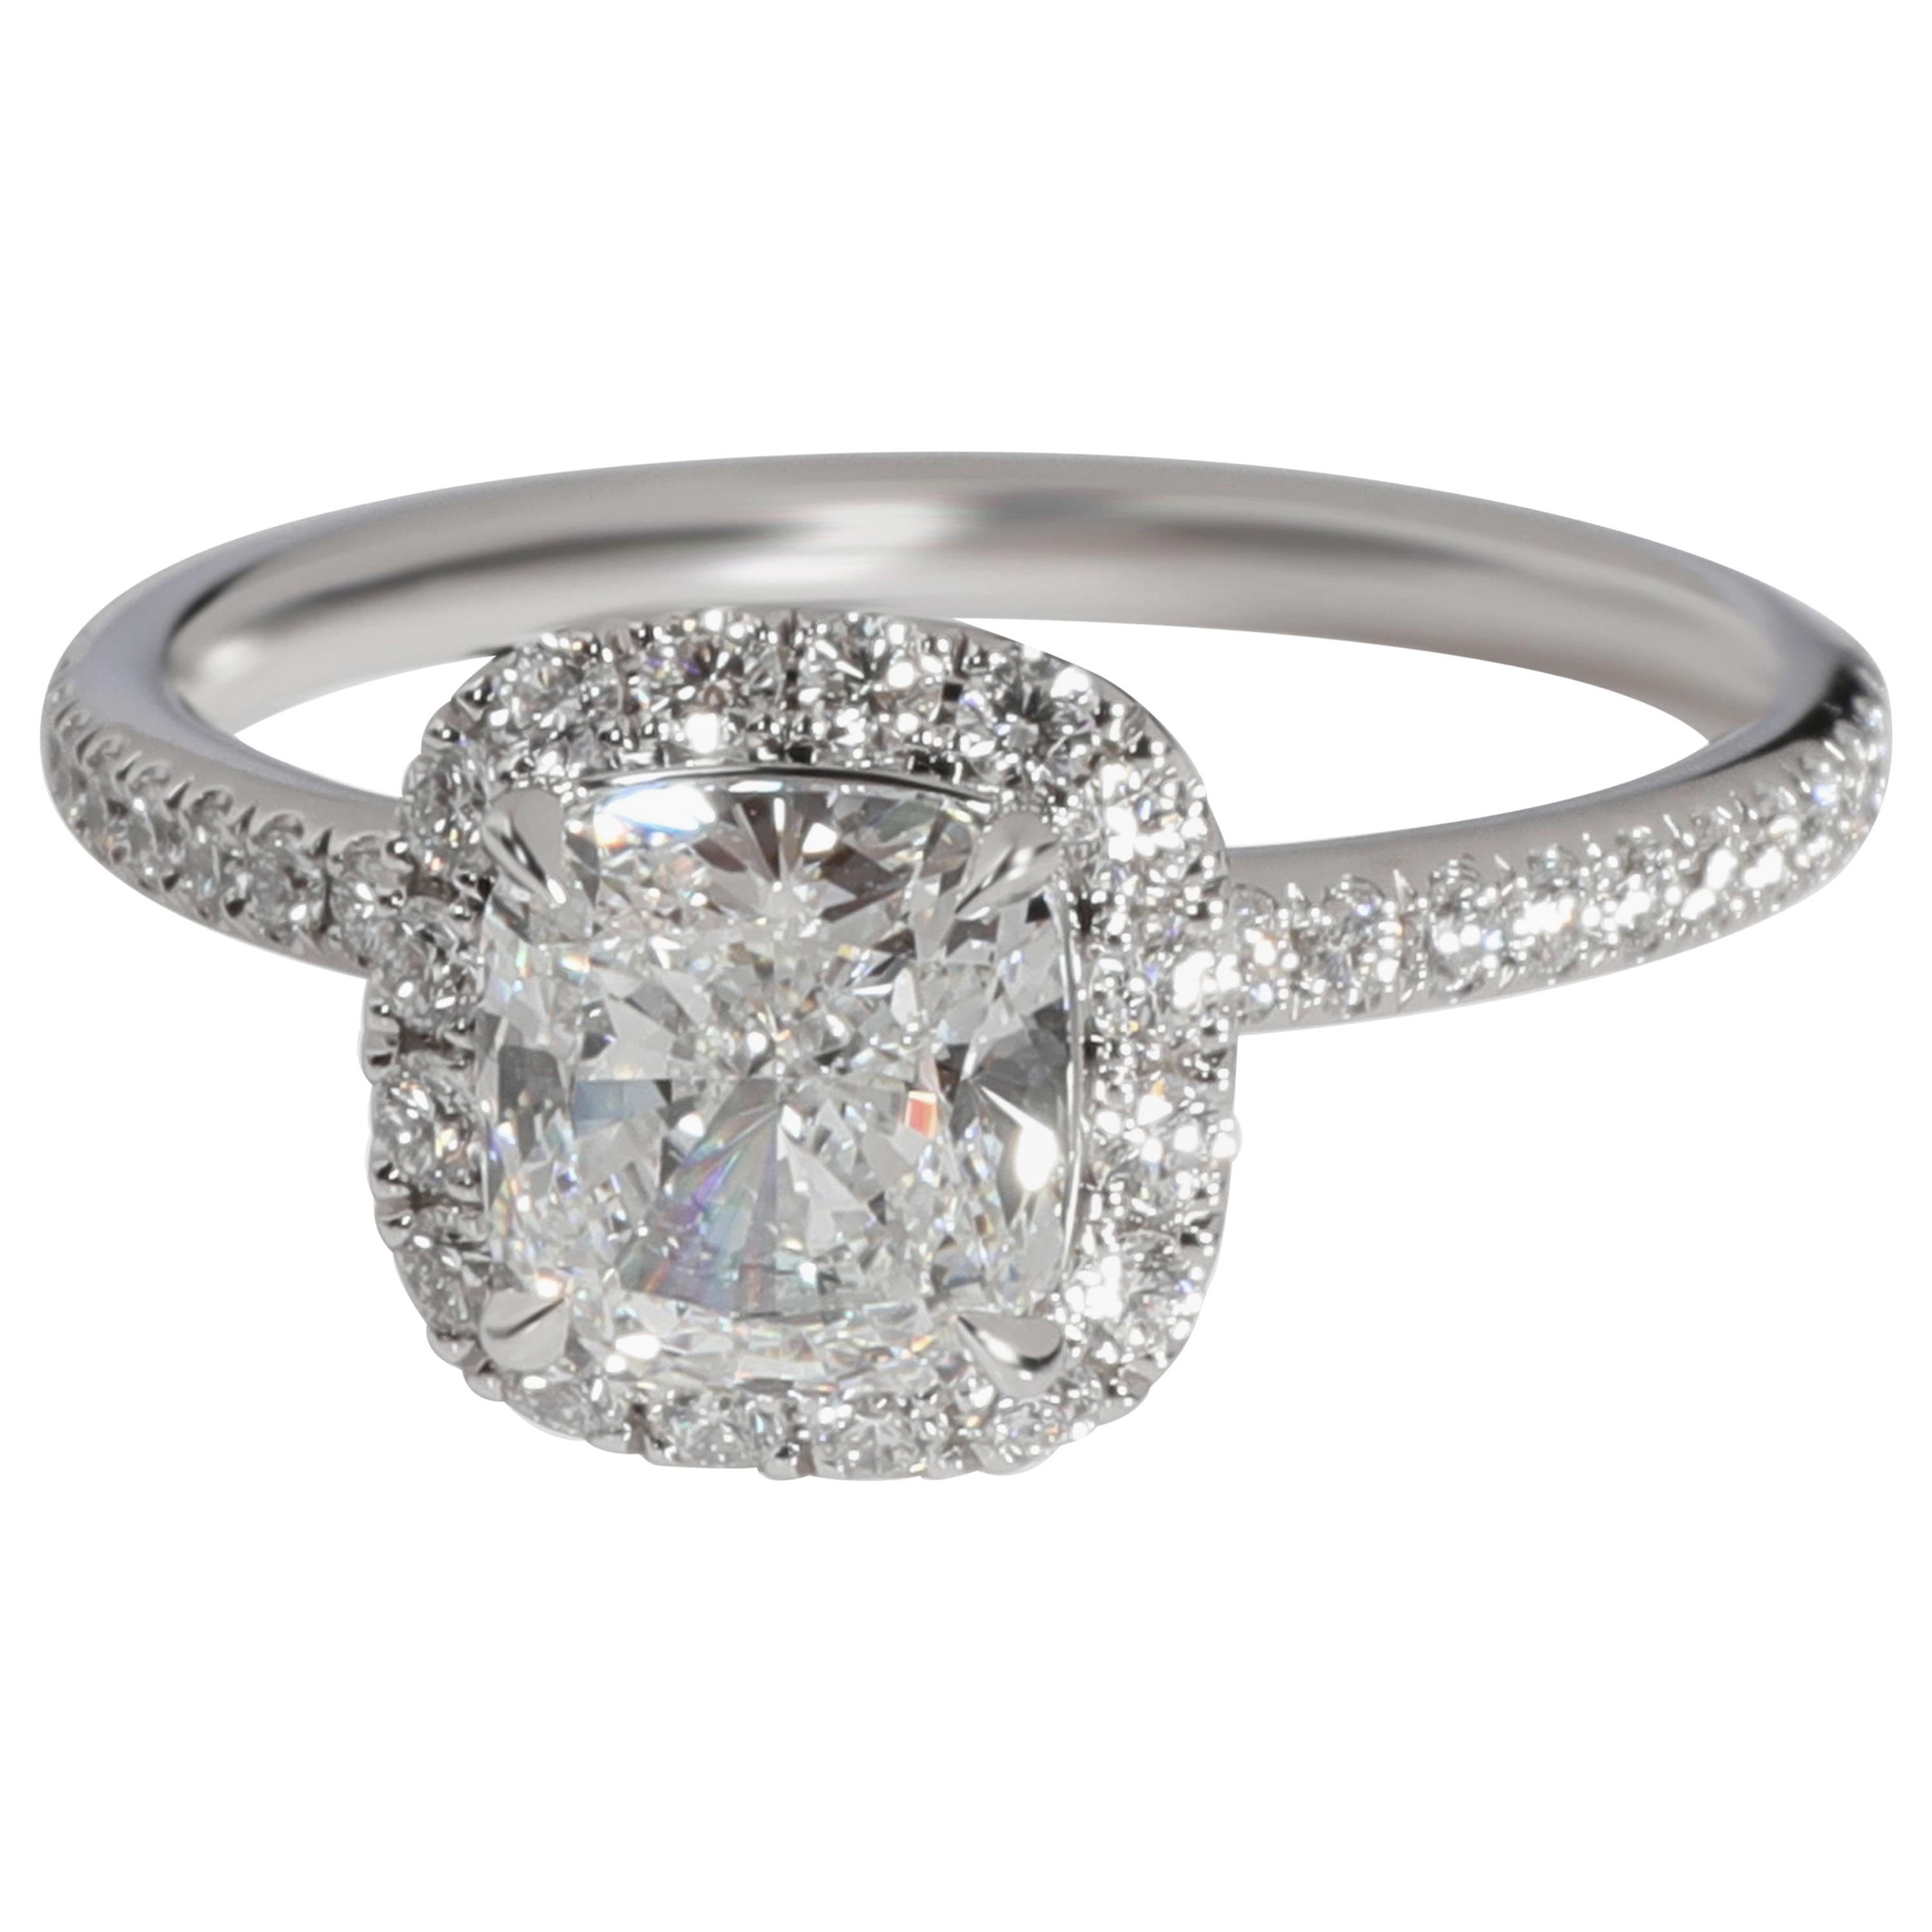 Harry Winston Cushion Diamond Engagement Ring in Platinum E VS1 1.76 Carat